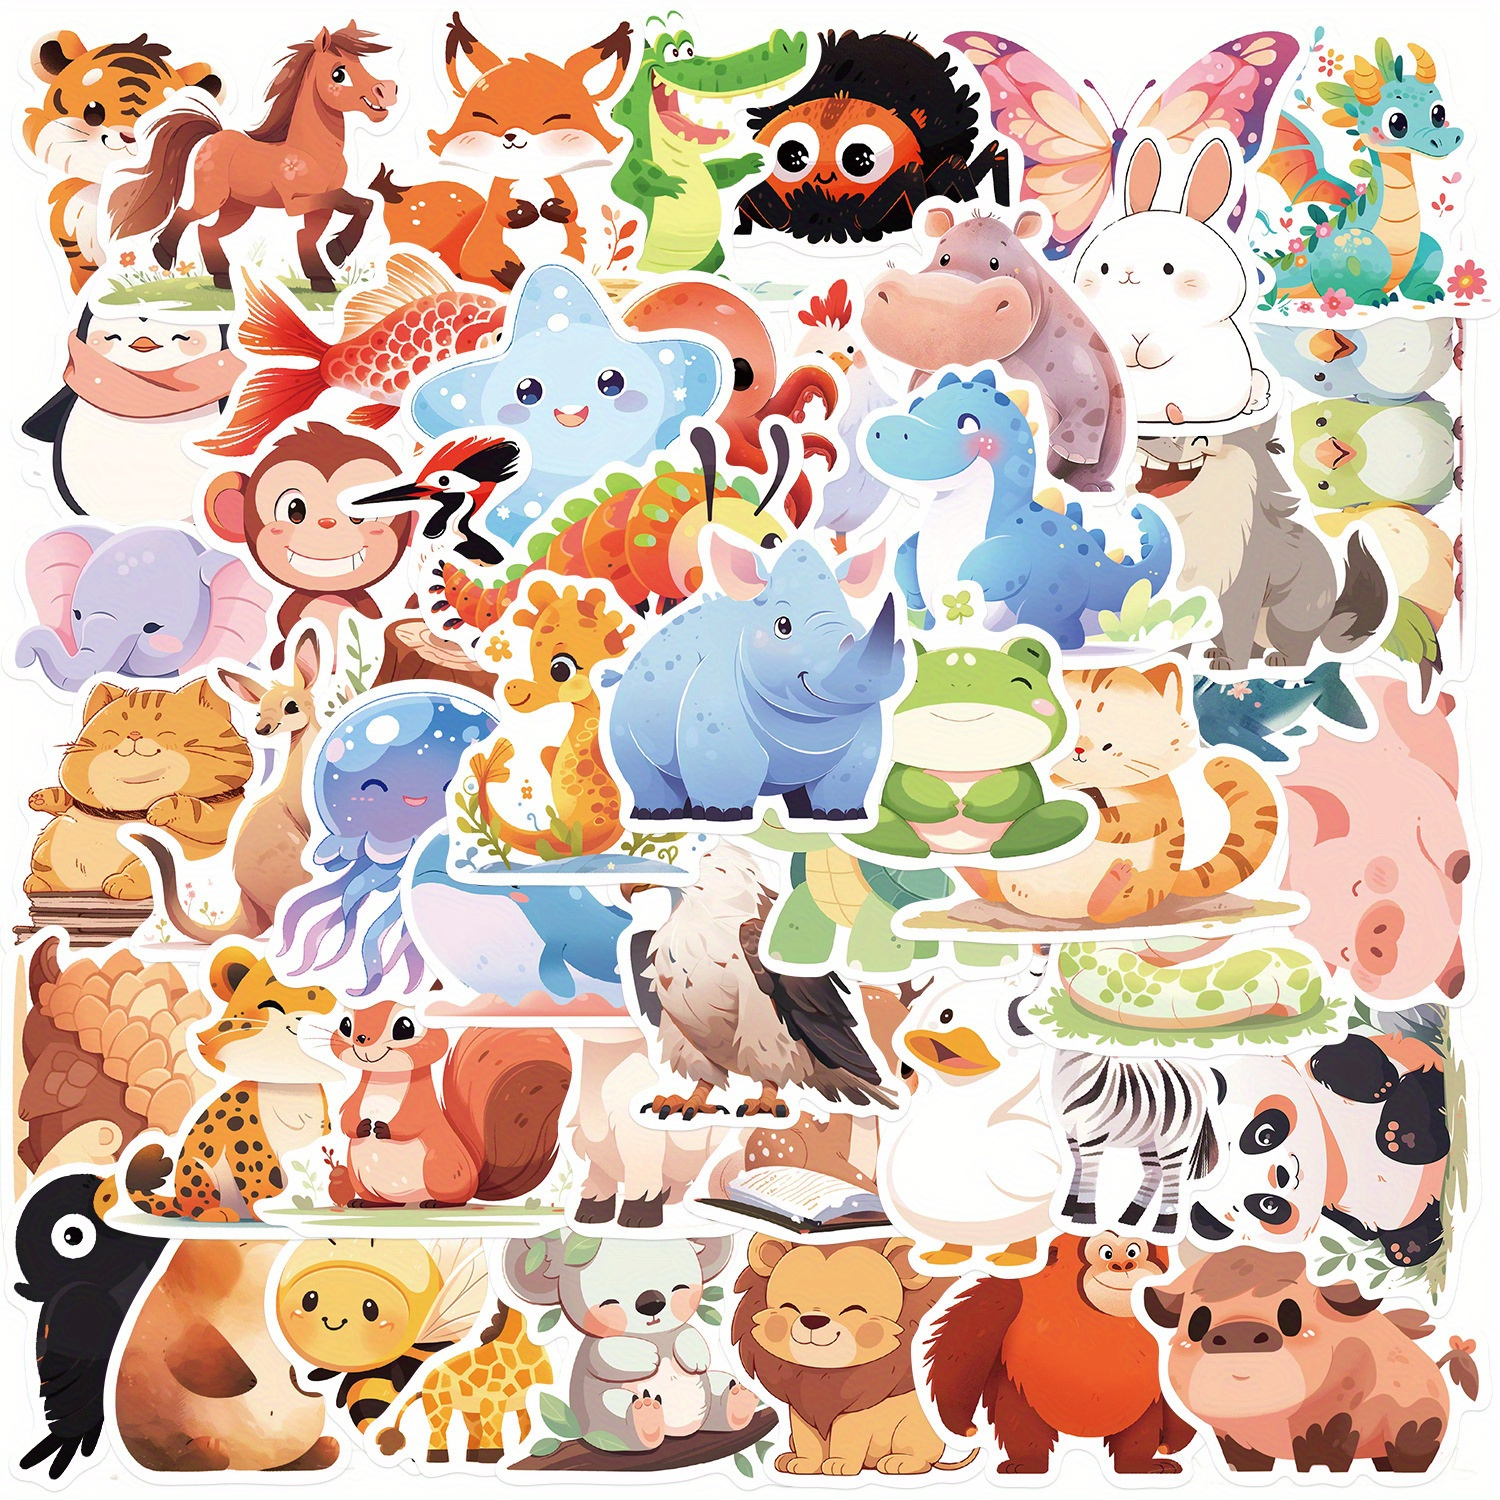 Design cute kawaii animal and object for sticker, vinyl sticker